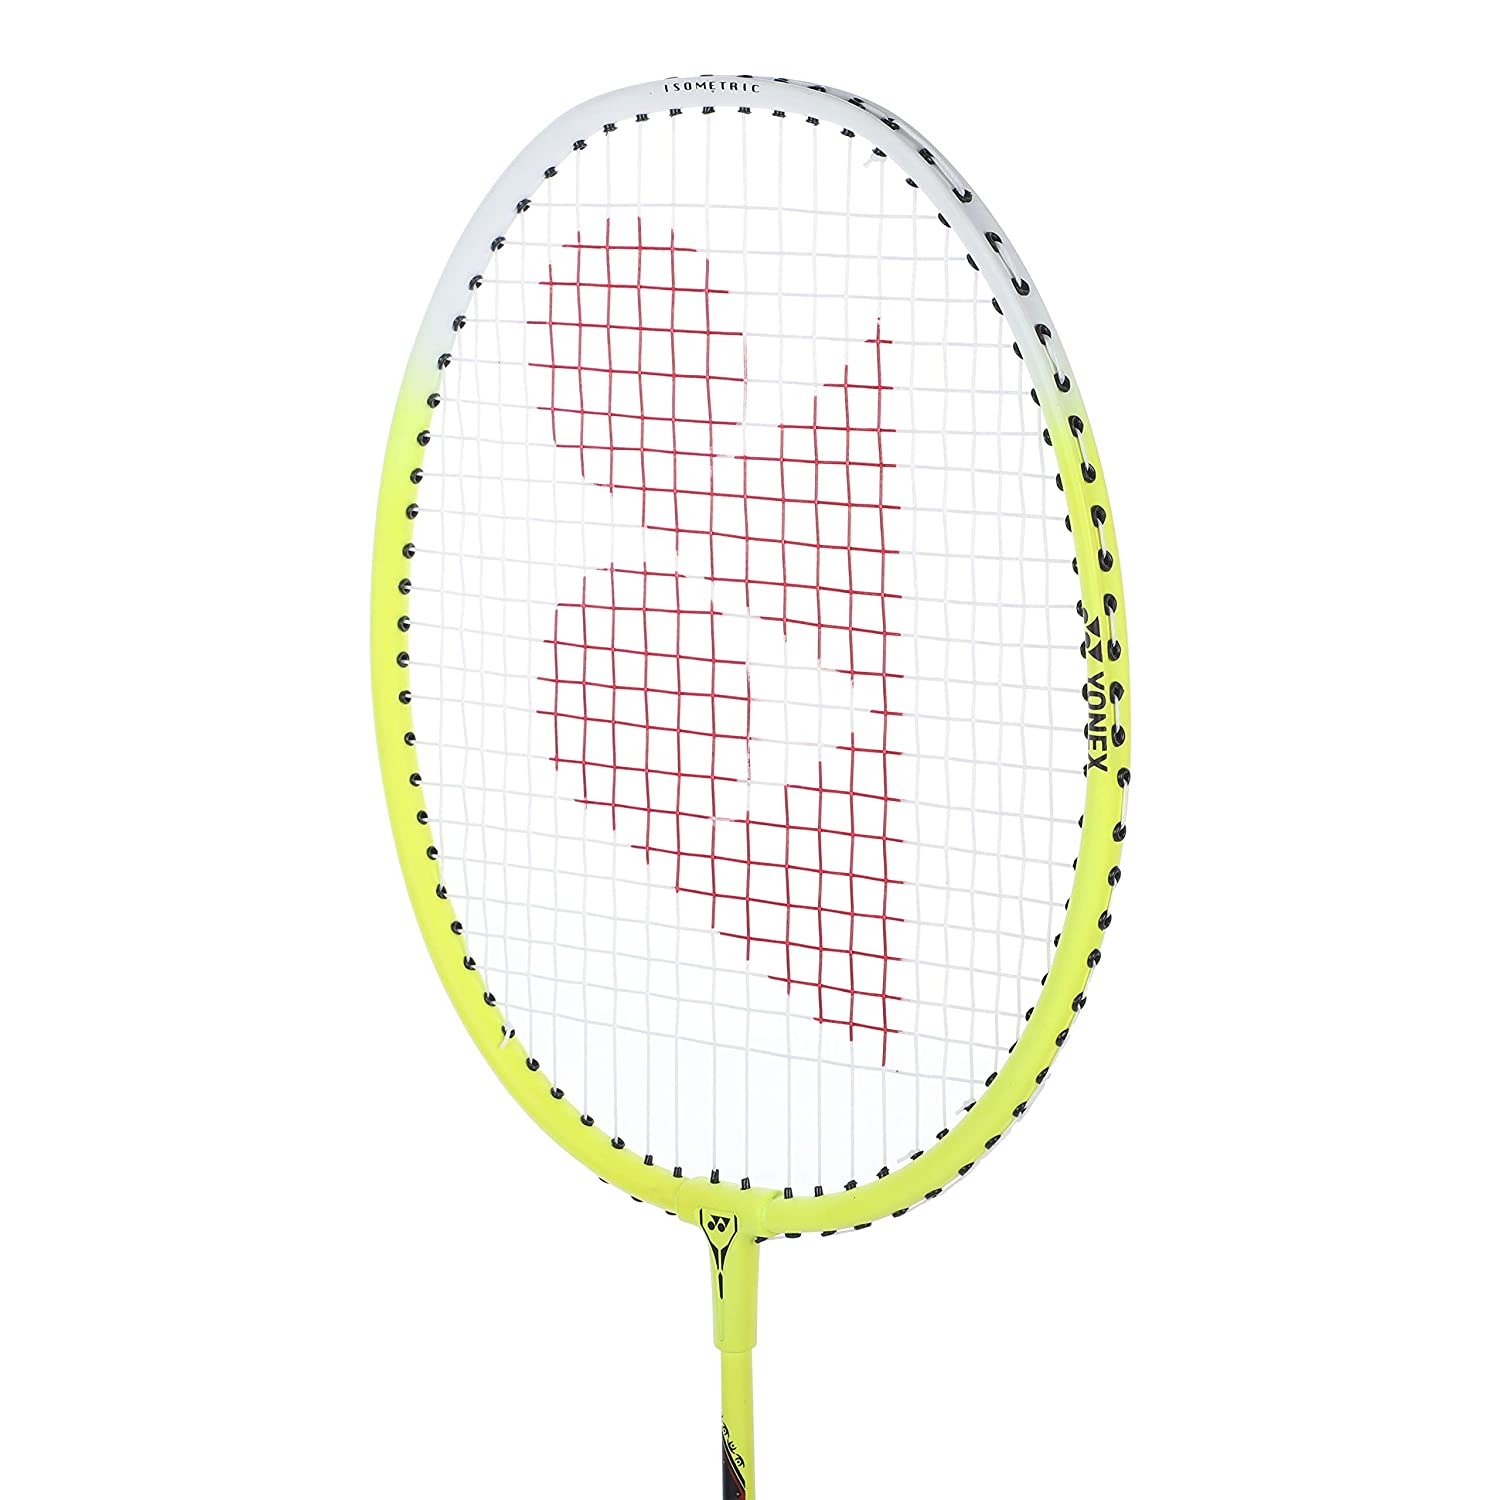 Yonex ZR 101 Aluminium Strung Badminton Racquet with Full Cover (Yellow) - Best Price online Prokicksports.com